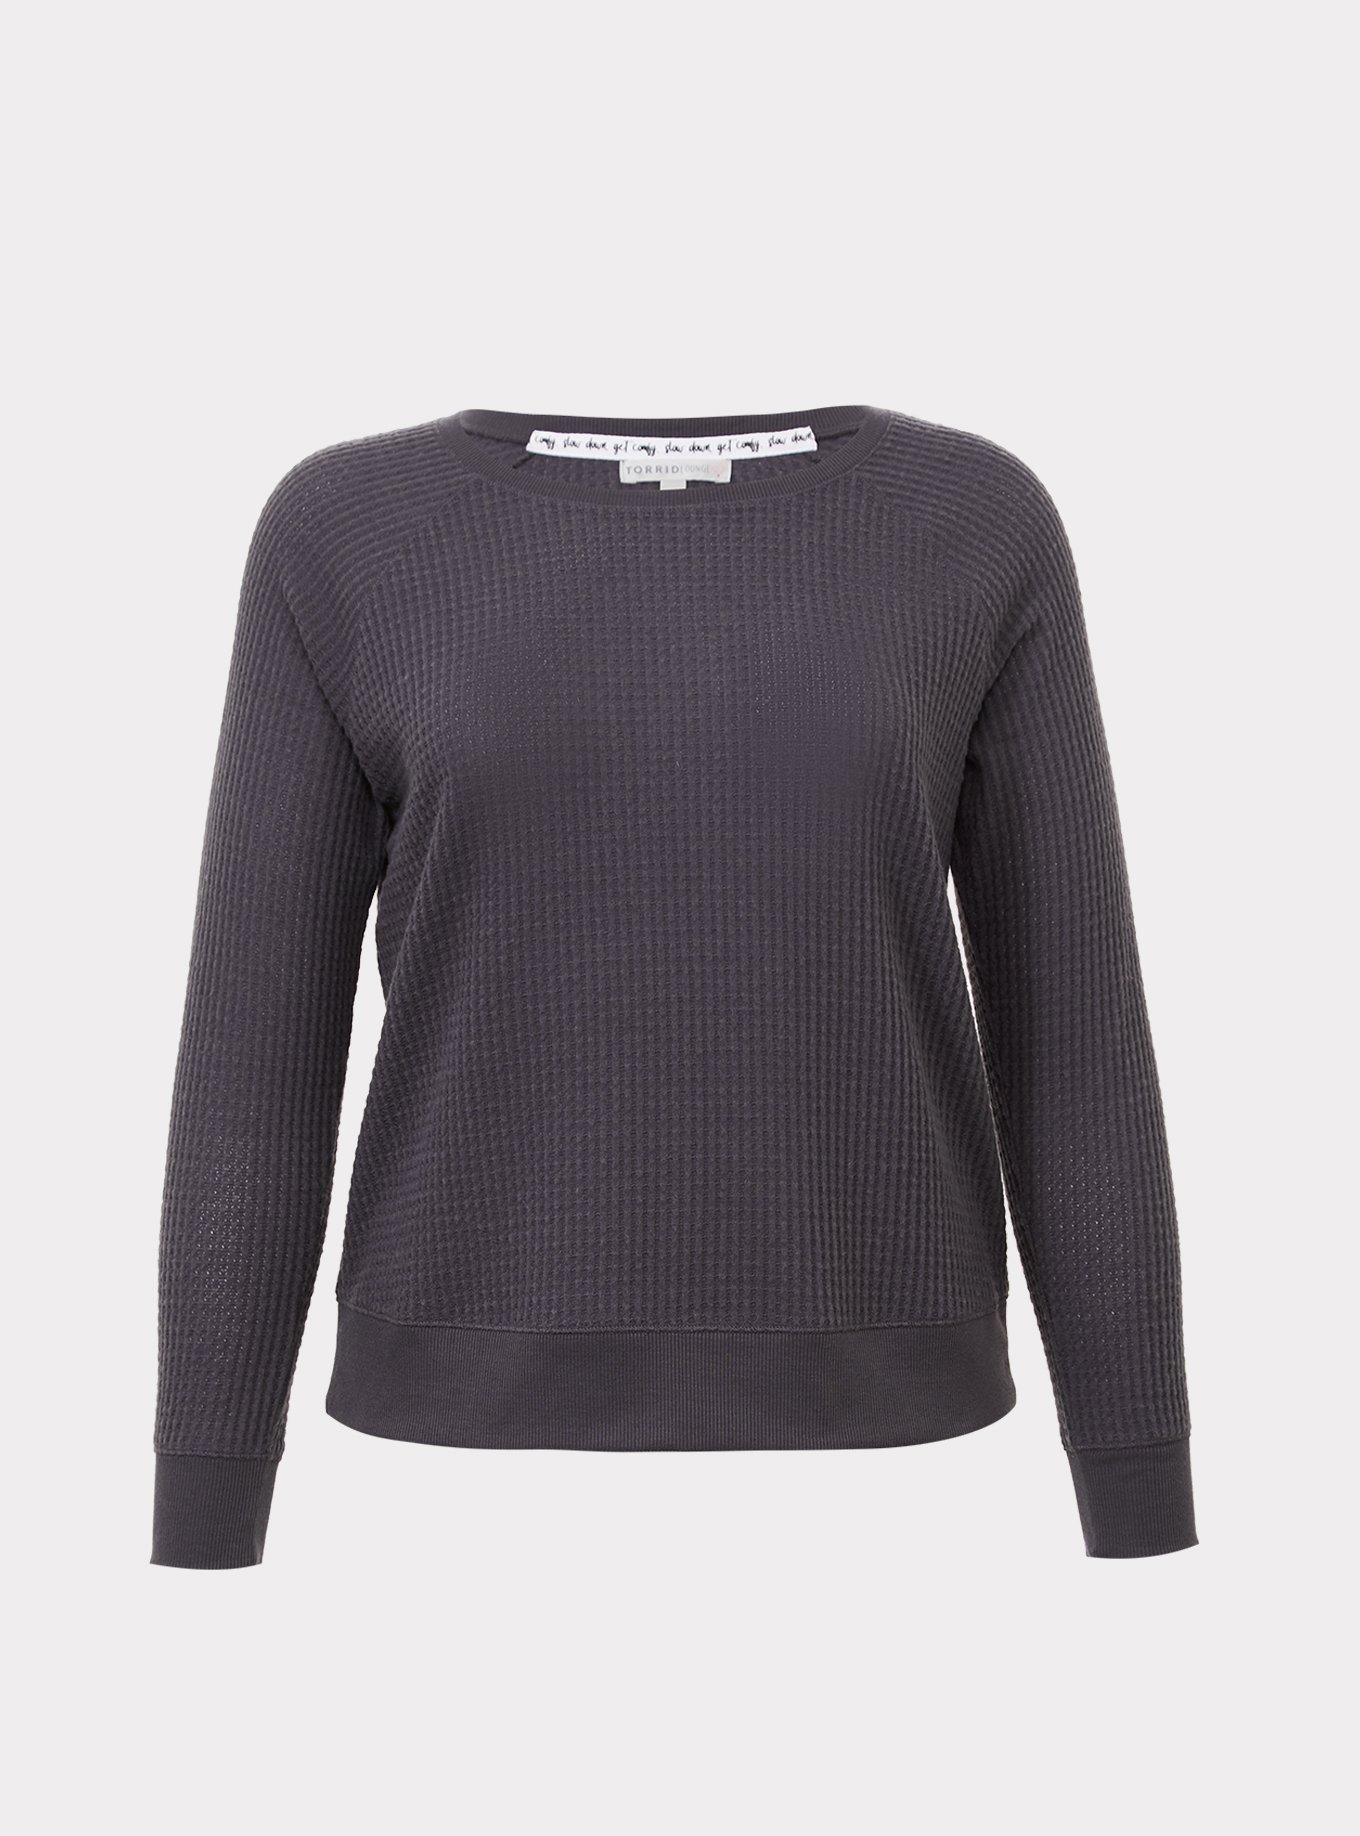 Plus Size - Grey Waffle Knit Lounge Sweatshirt - Torrid